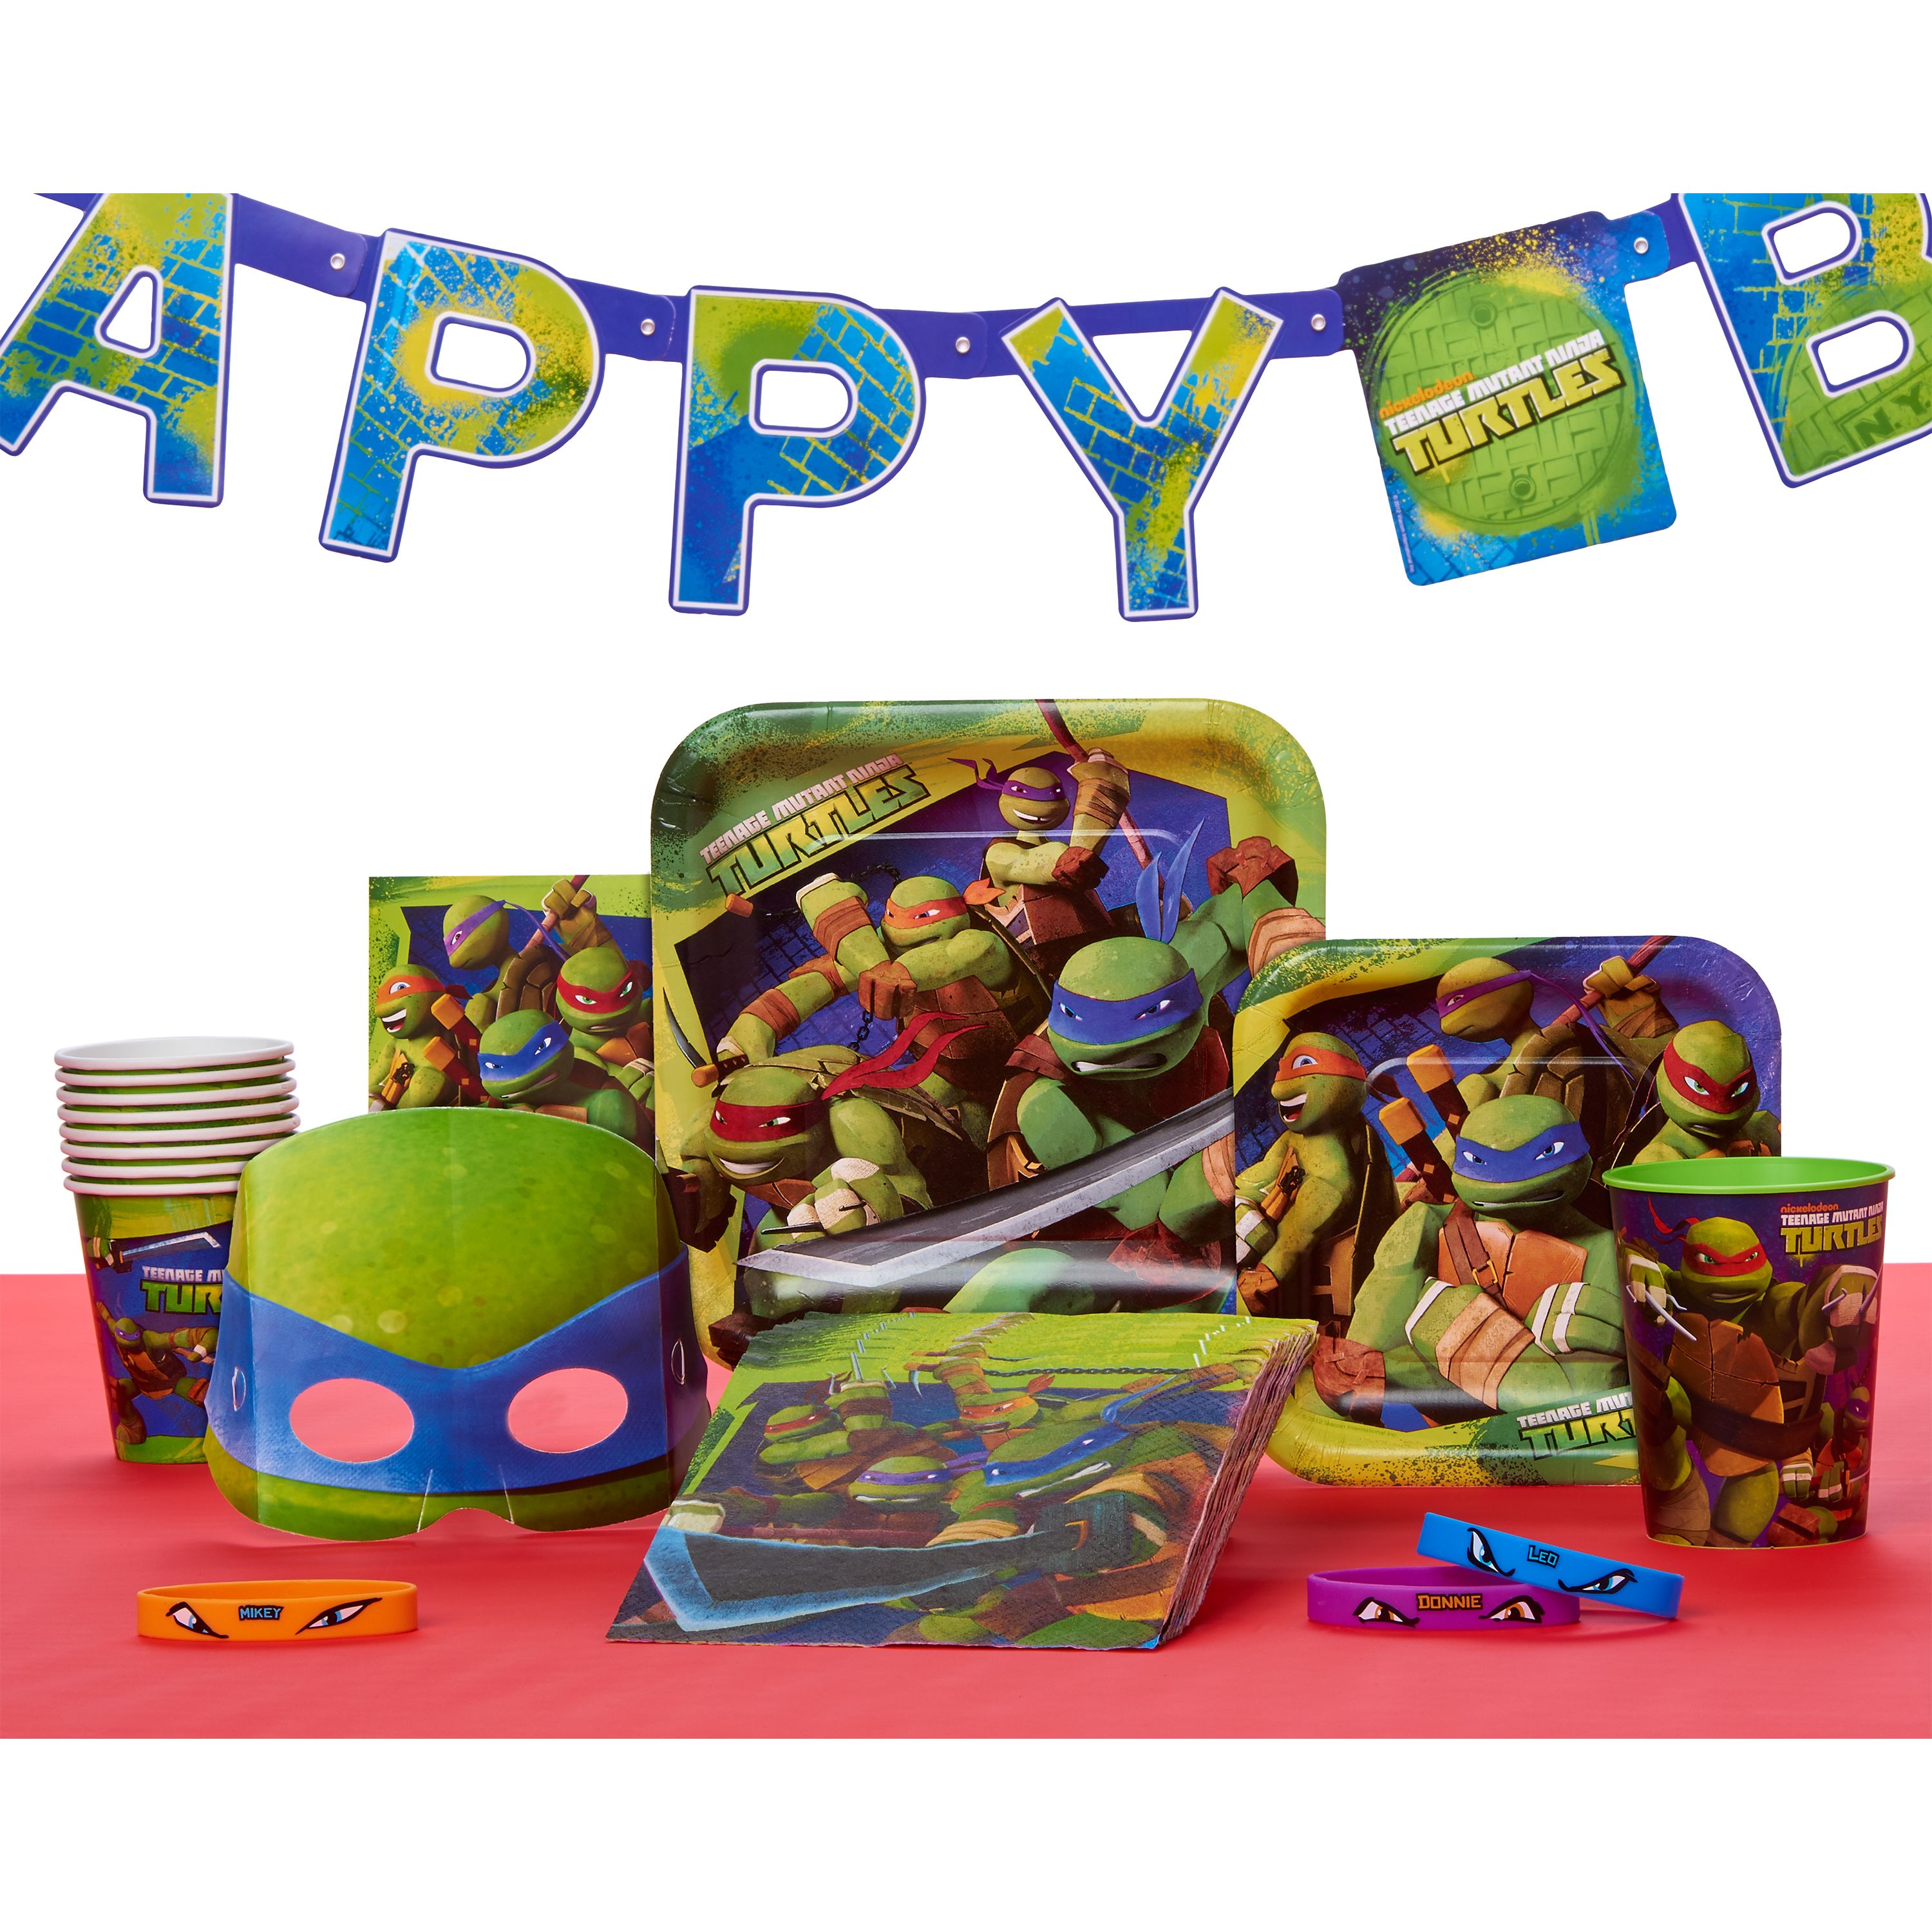 Teenage Mutant Ninja Turtles Birthday Party Banner, Party Supplies - image 2 of 2